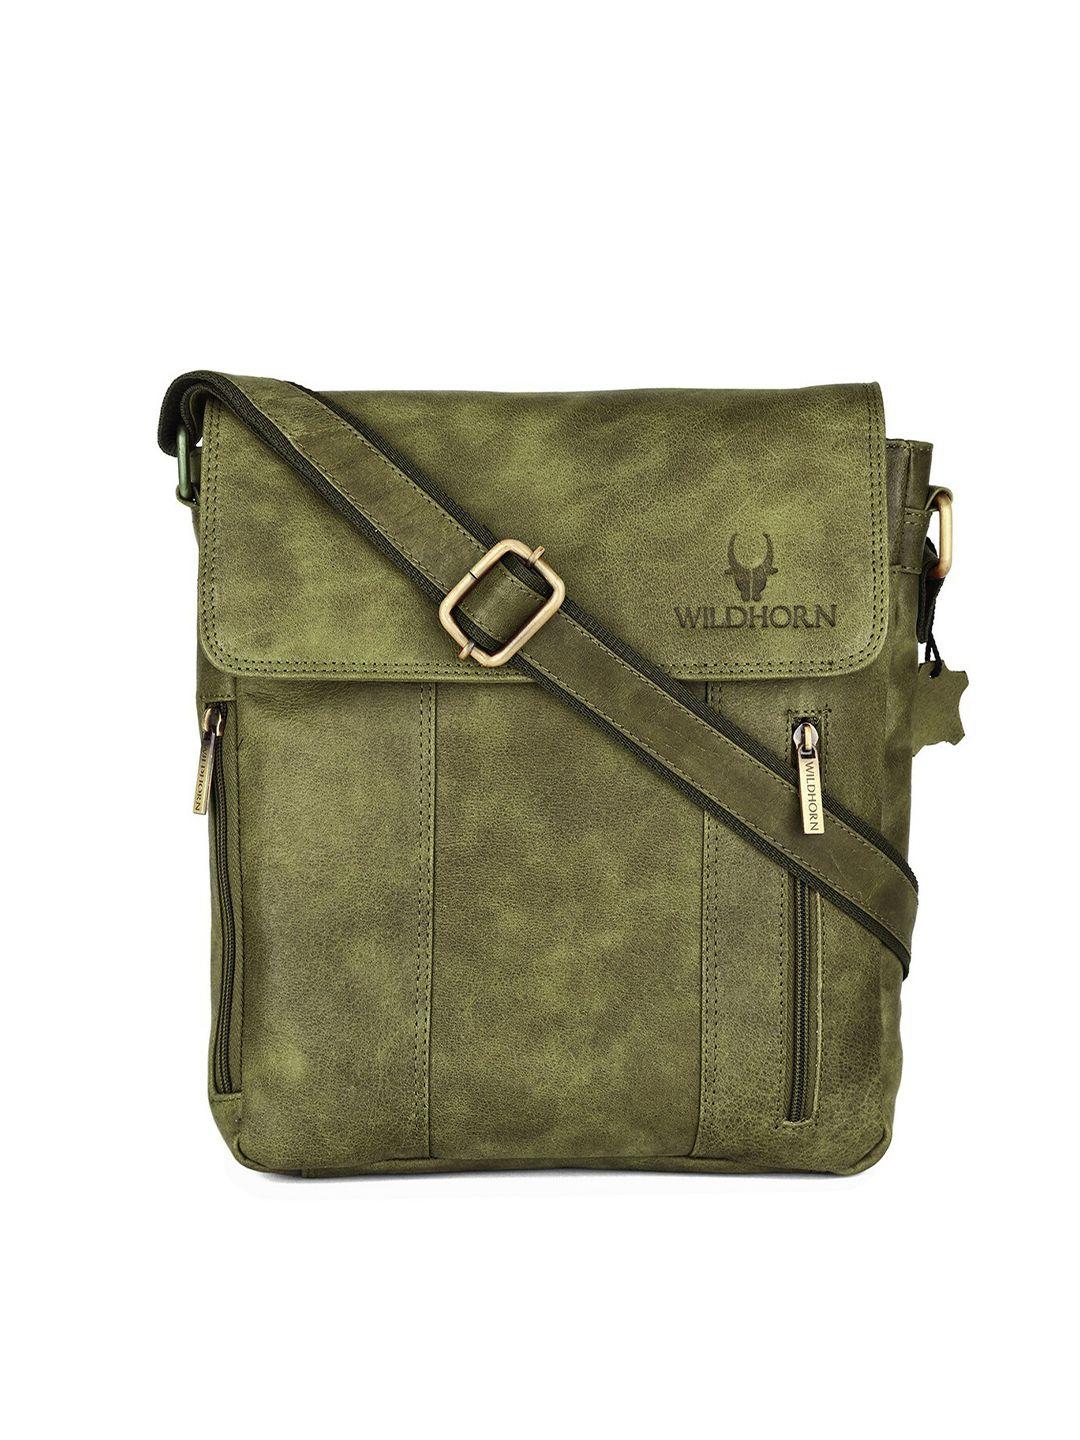 wildhorn men green leather messenger bag